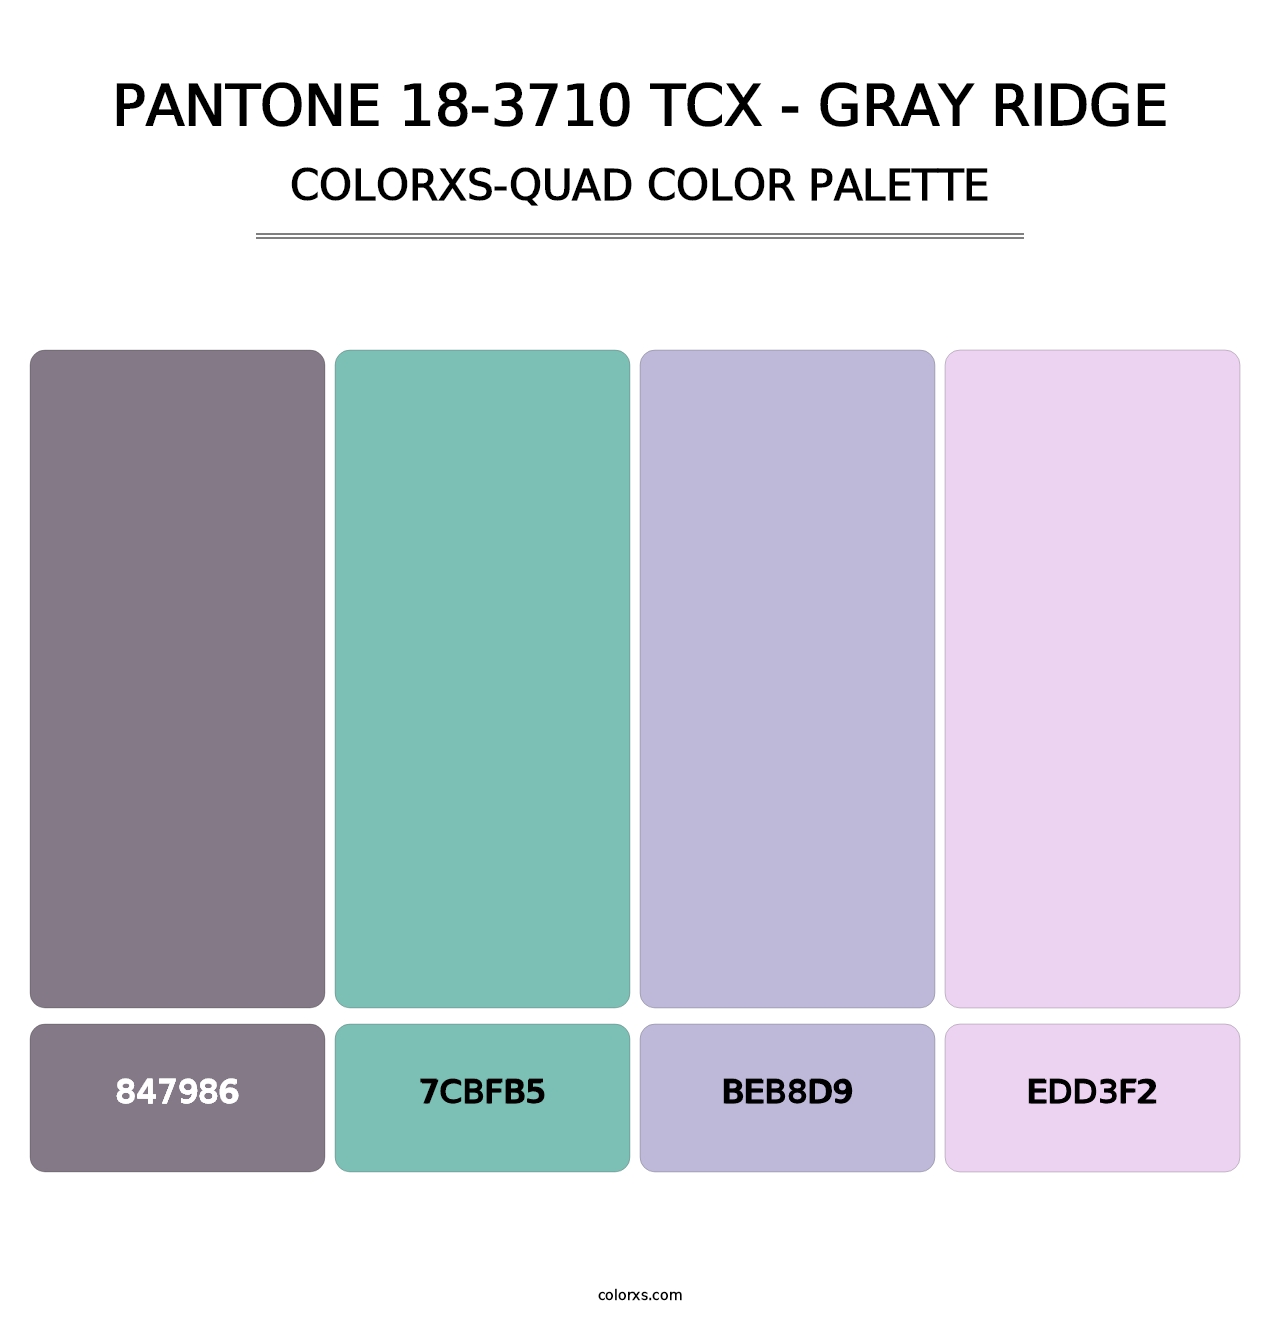 PANTONE 18-3710 TCX - Gray Ridge - Colorxs Quad Palette